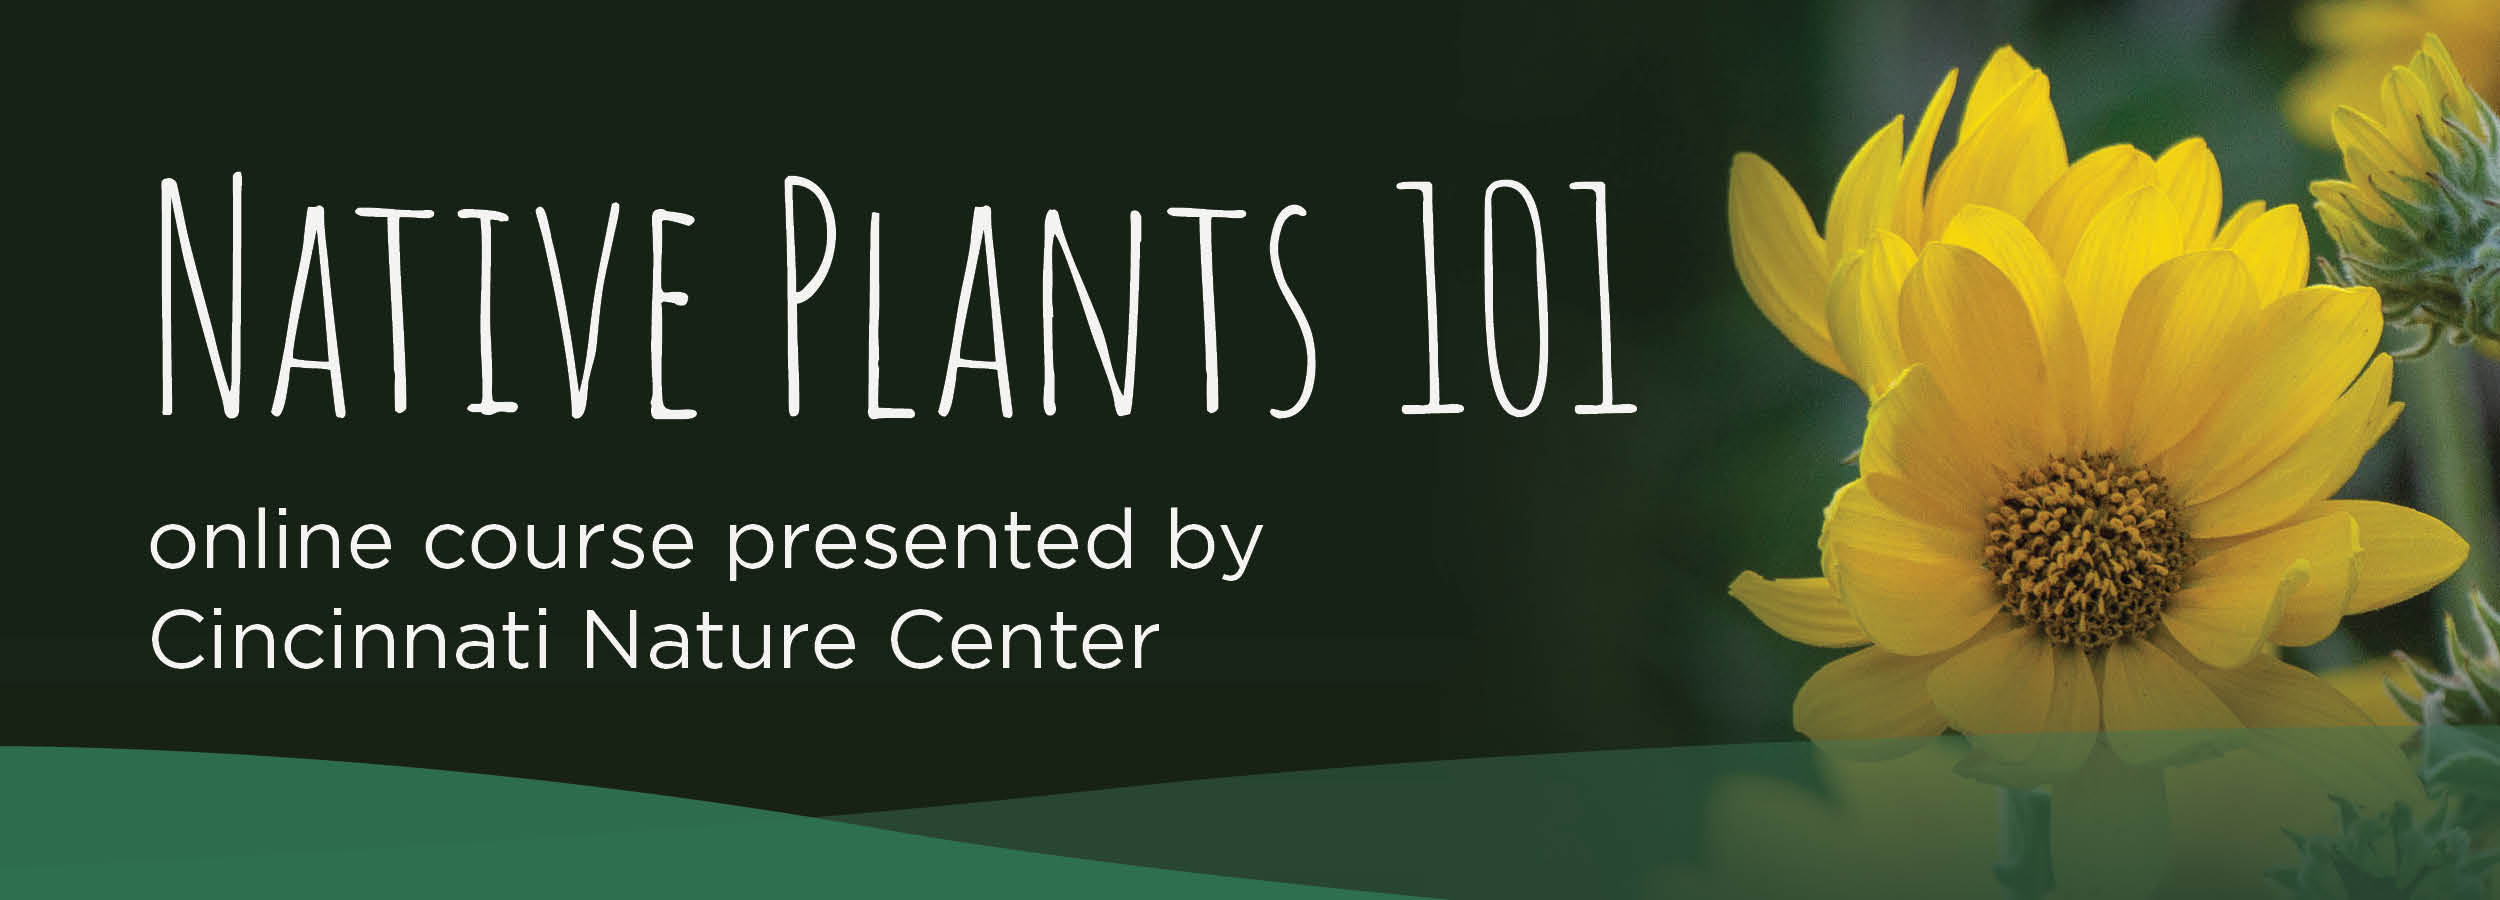 Native Plants 101 Online Course presented by Cincinnati Nature Center